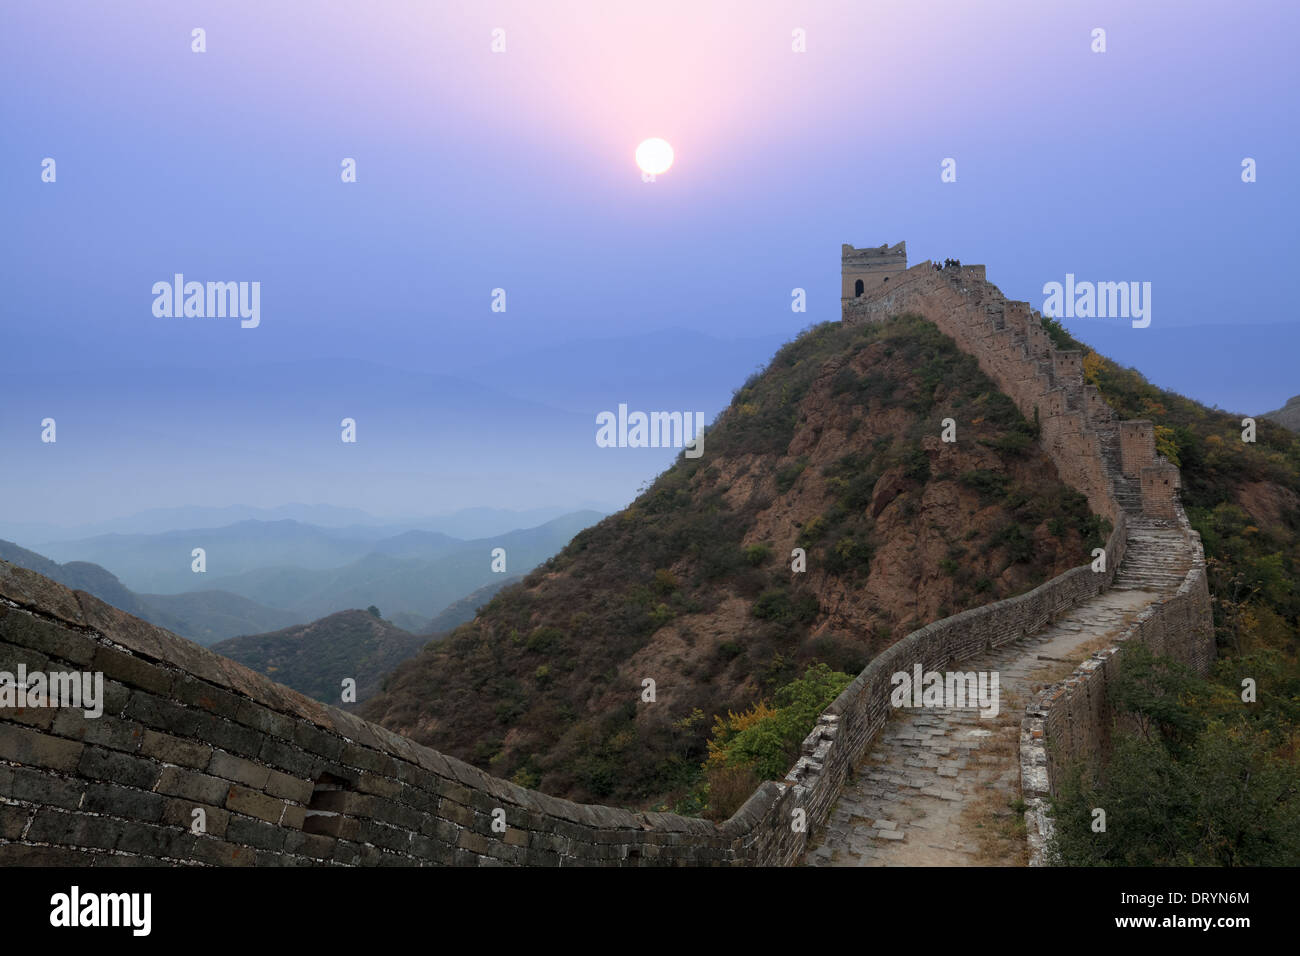 La gran muralla de China al amanecer. Foto de stock